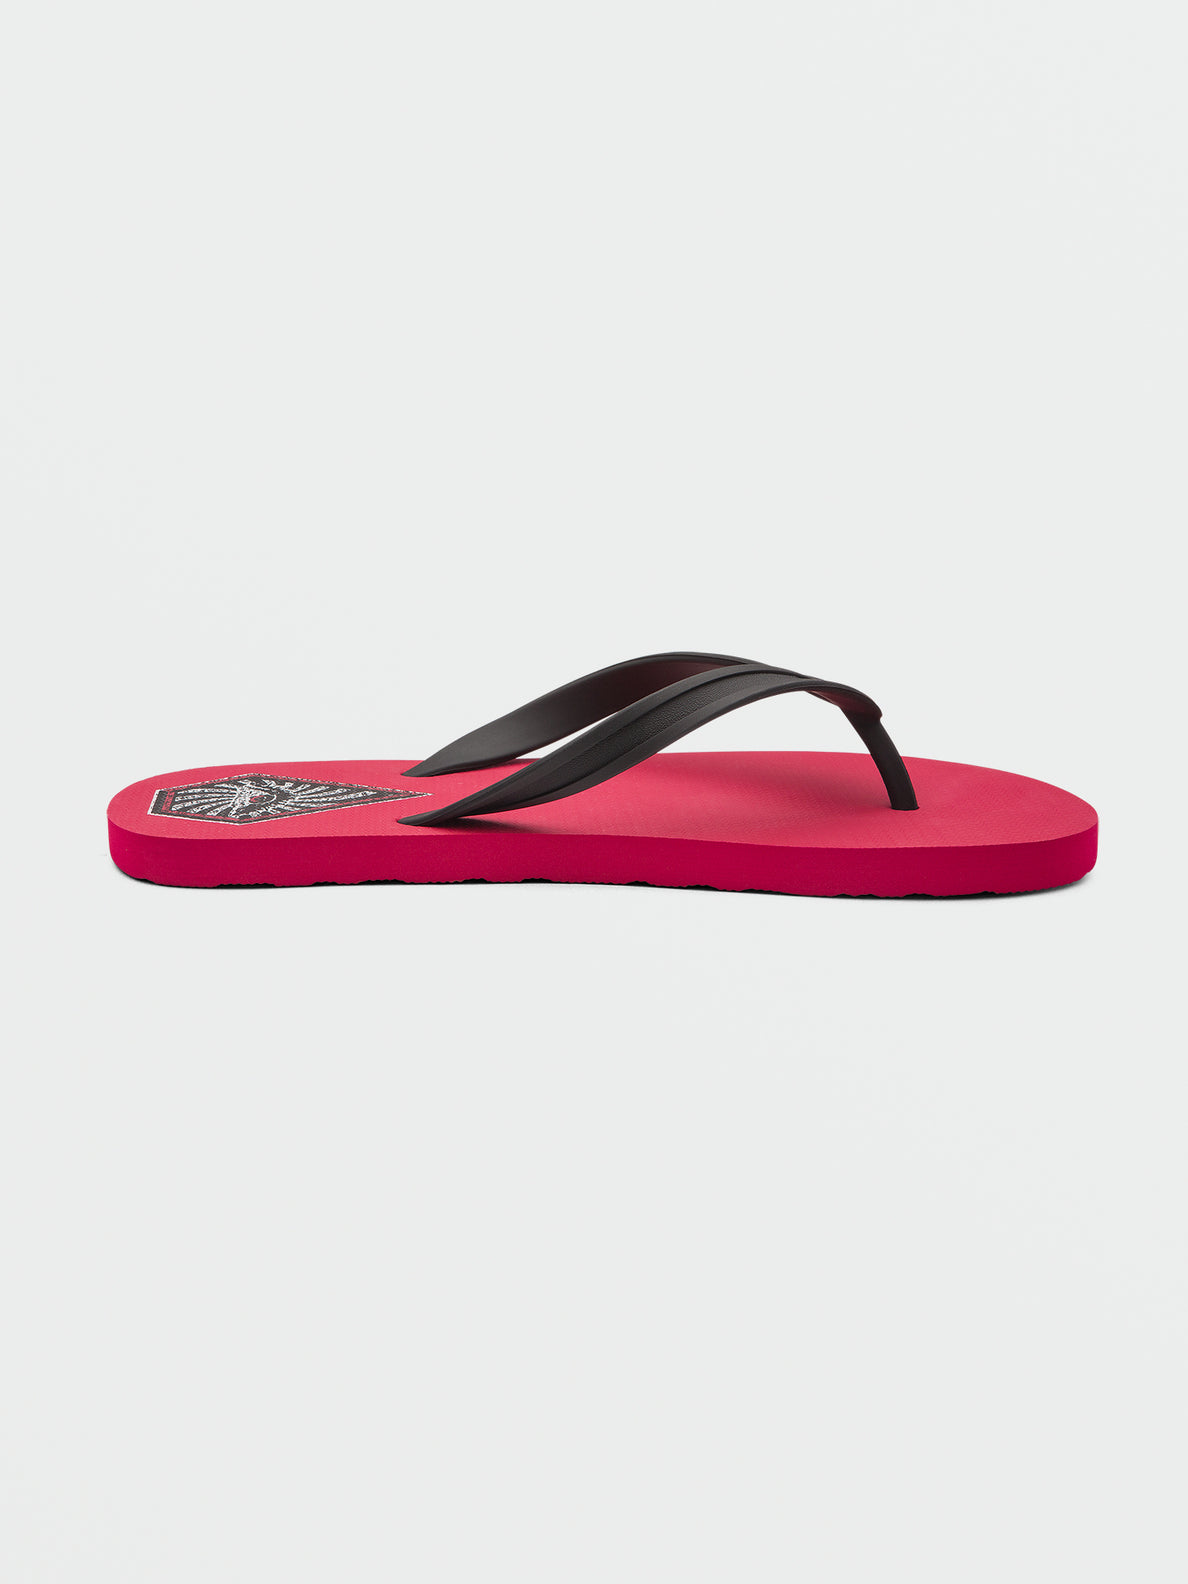 Rocker 2 Sandals - Ribbon Red